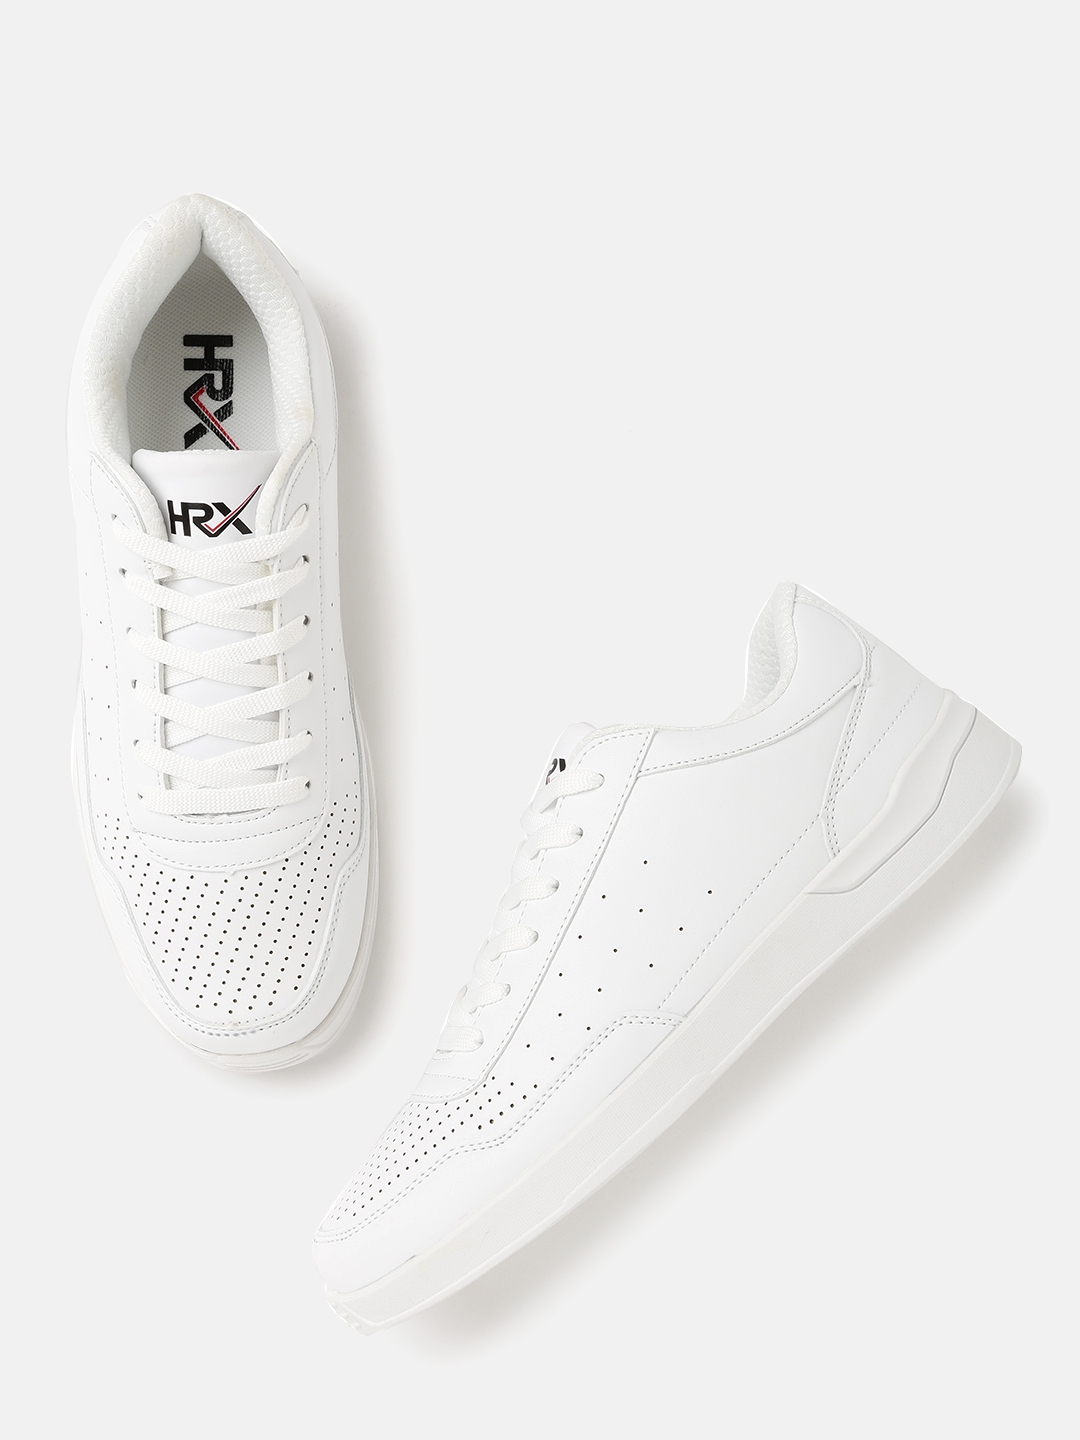 hrx white sneakers myntra